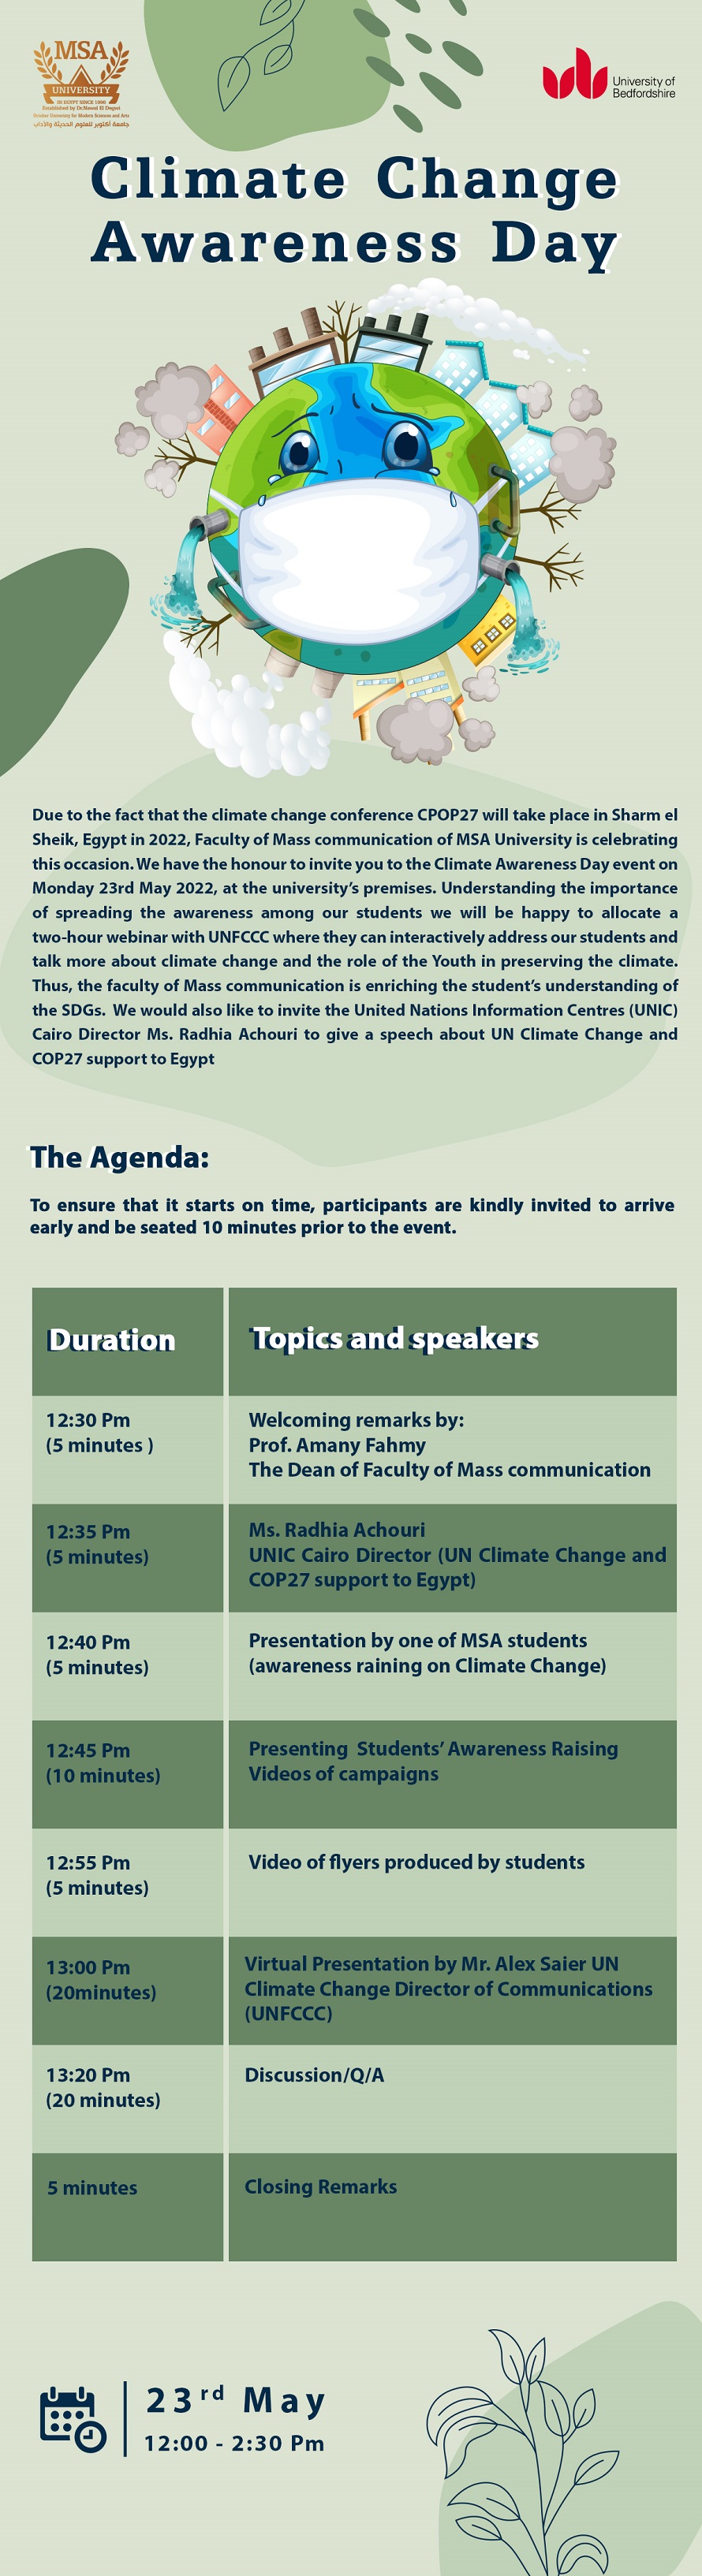 MSA University - Climate Change Agenda 